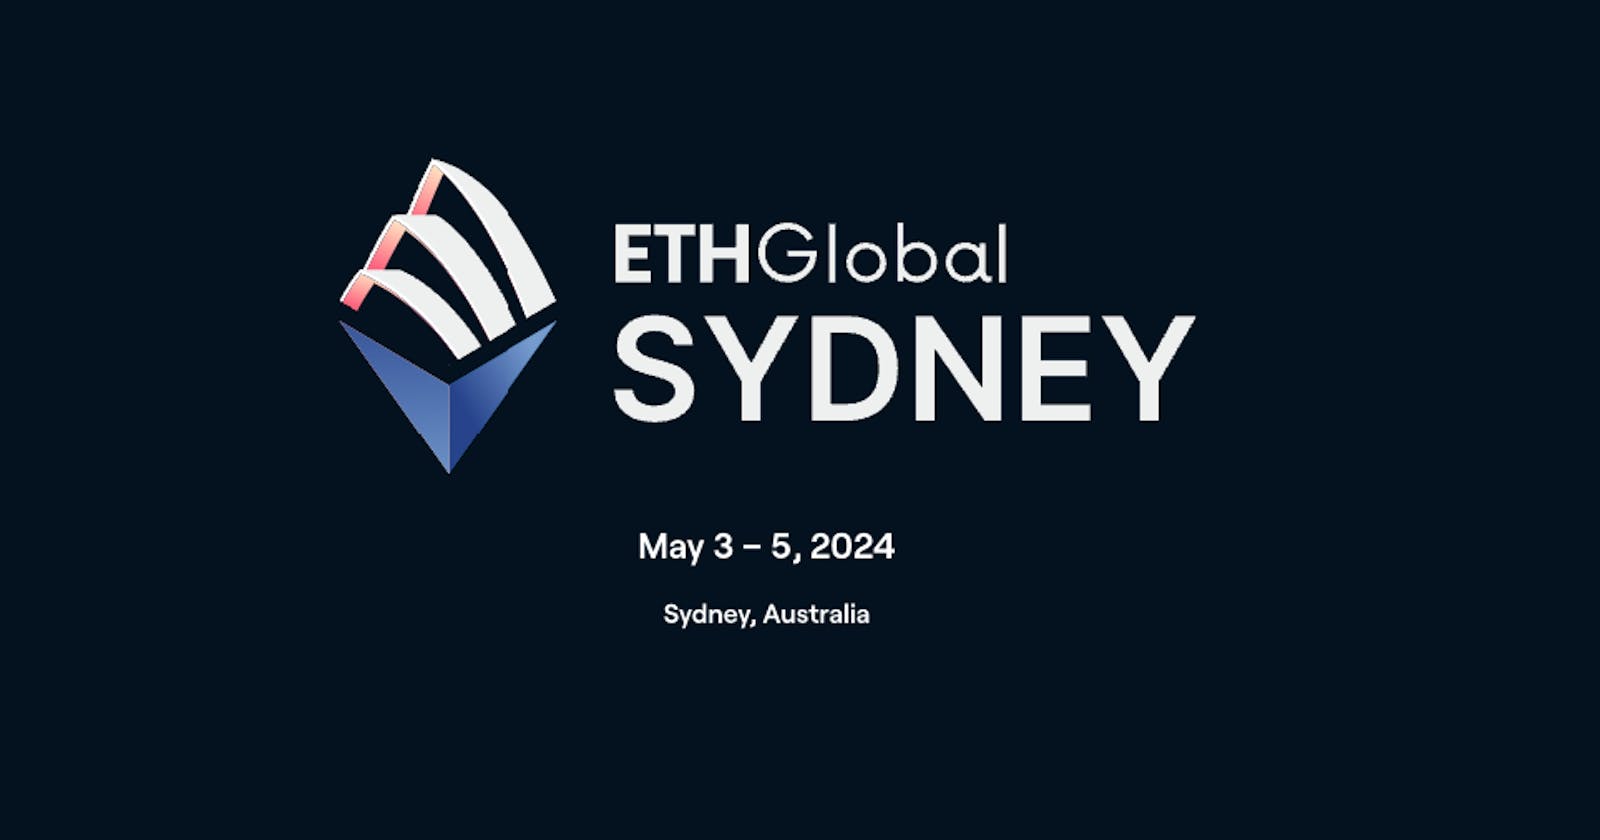 ETHGlobal Sydney 2024